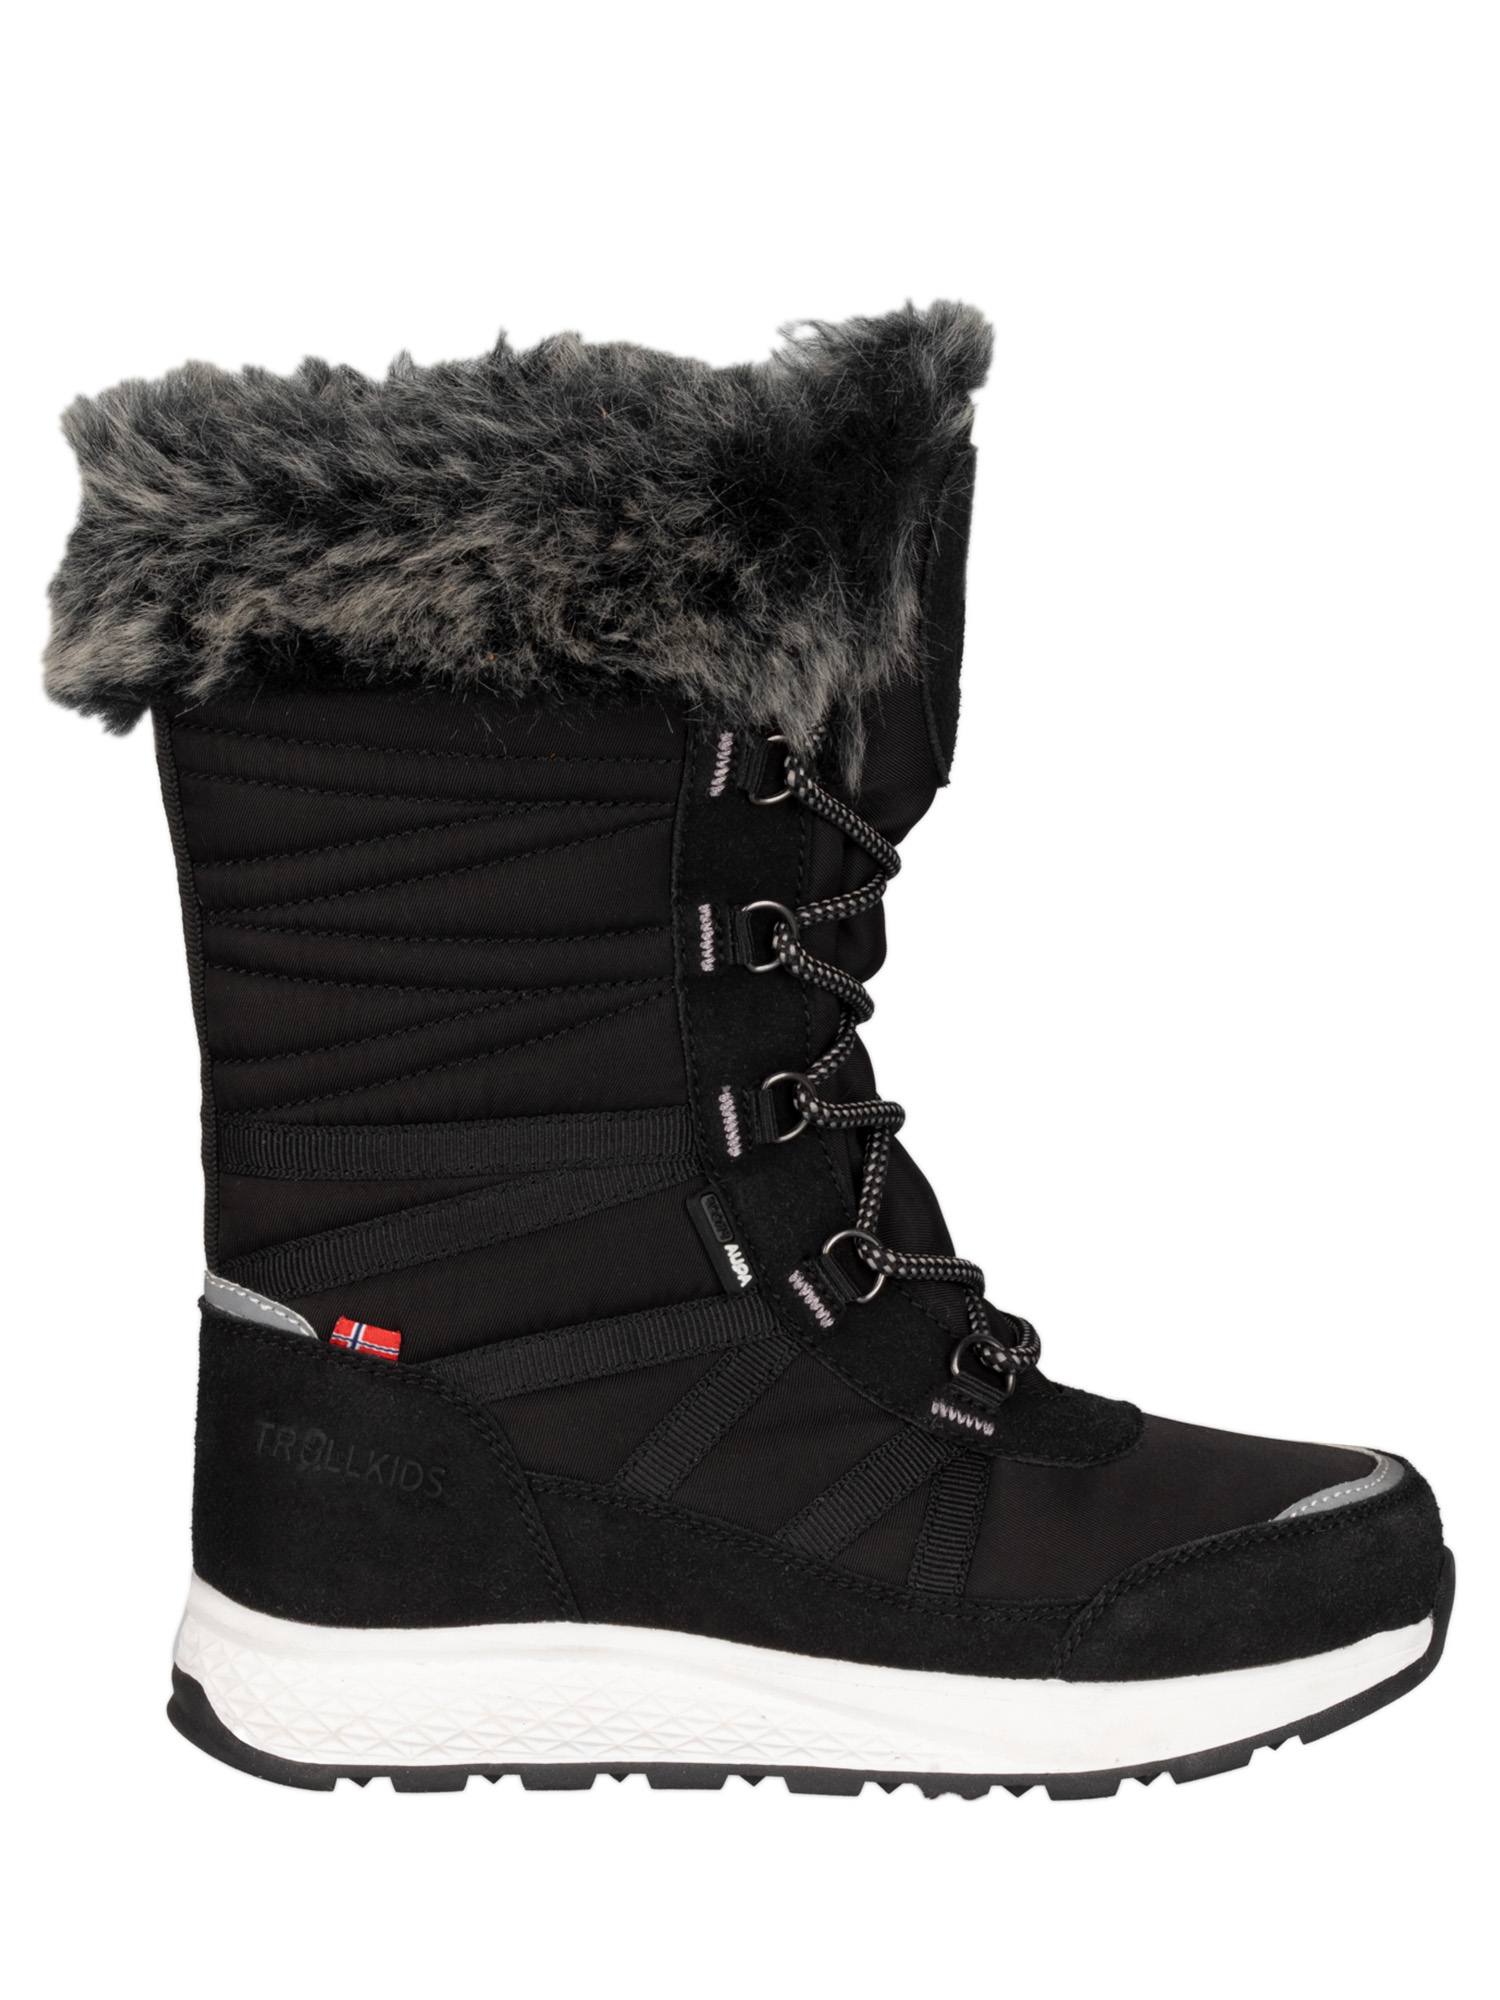 Ботинки Trollkids Girls Hemsedal Winter Boots Xt, черный, 28